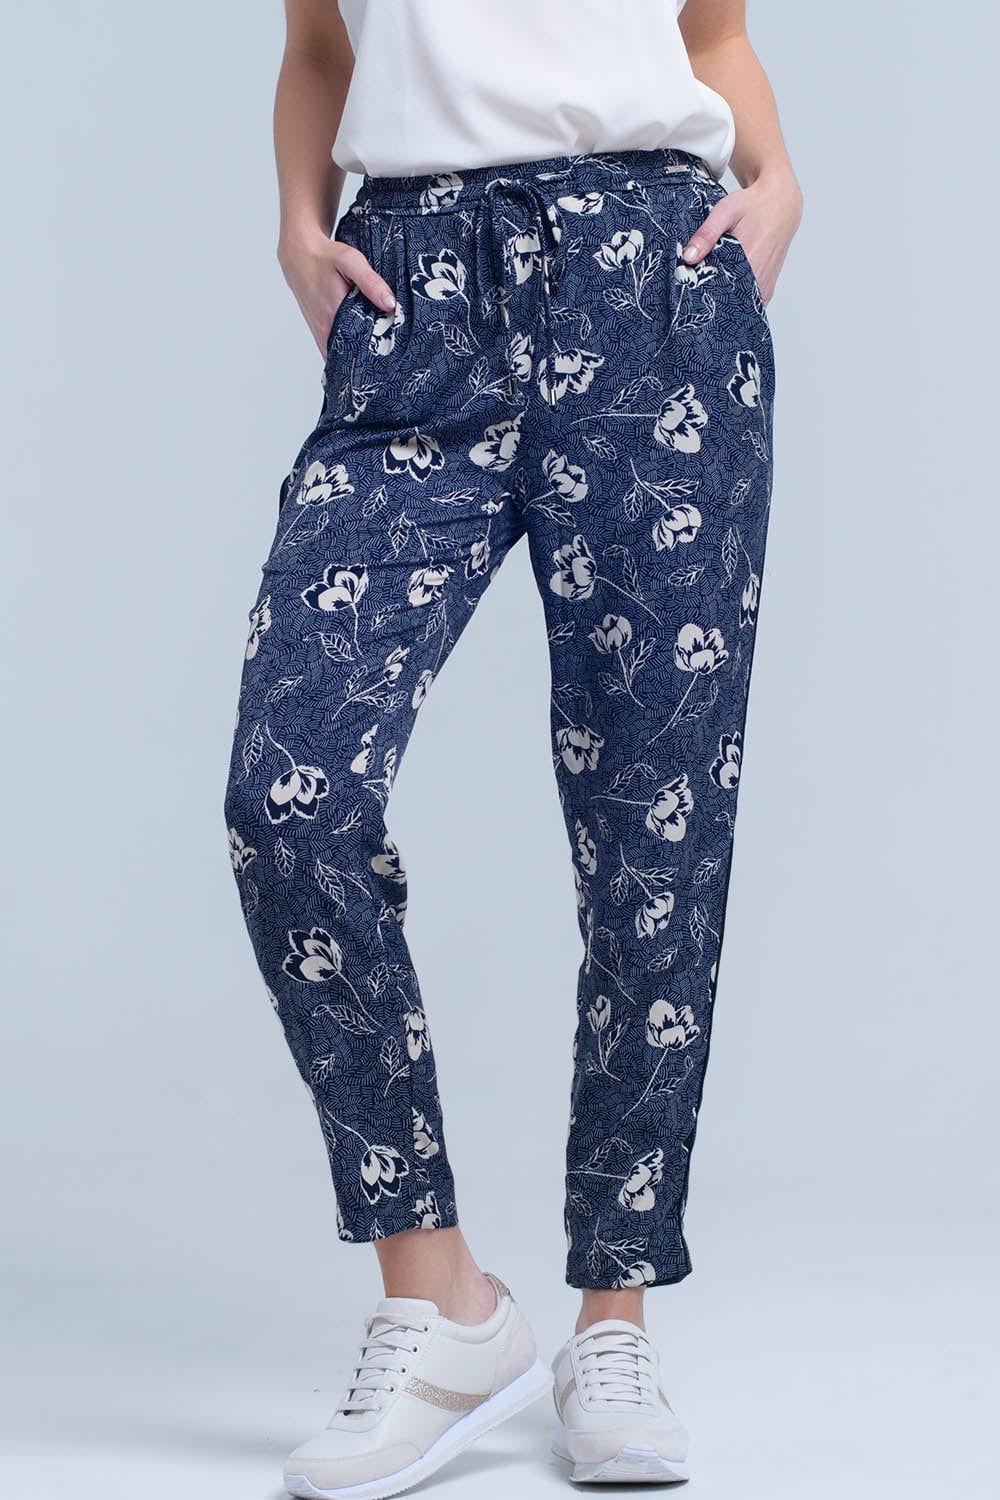 Q2 Women's Pants & Trousers Navy blue pants with floral print